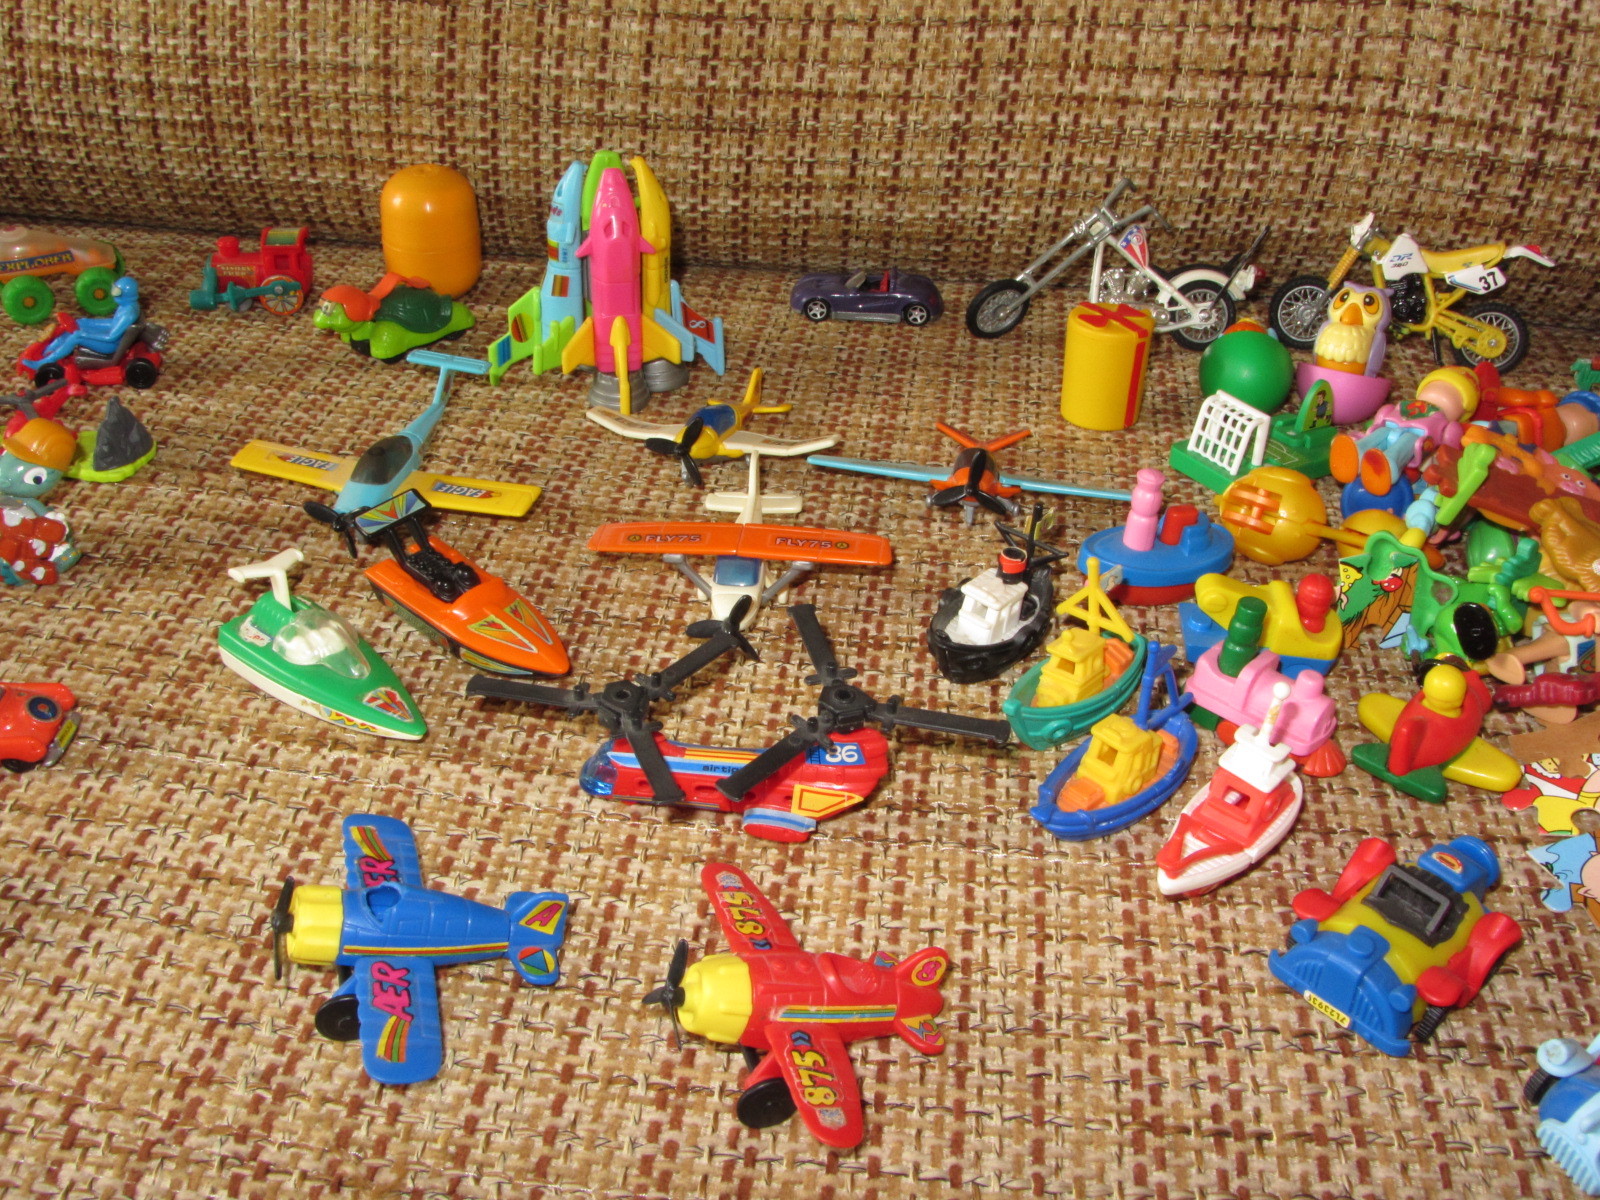 Куплю игрушки 90 х. Коллекции игрушек Киндер сюрприз 90е. Киндеры 90-х. Игрушки Киндер сюрприз 90-х. Коллекция игрушек Киндер 1990х.